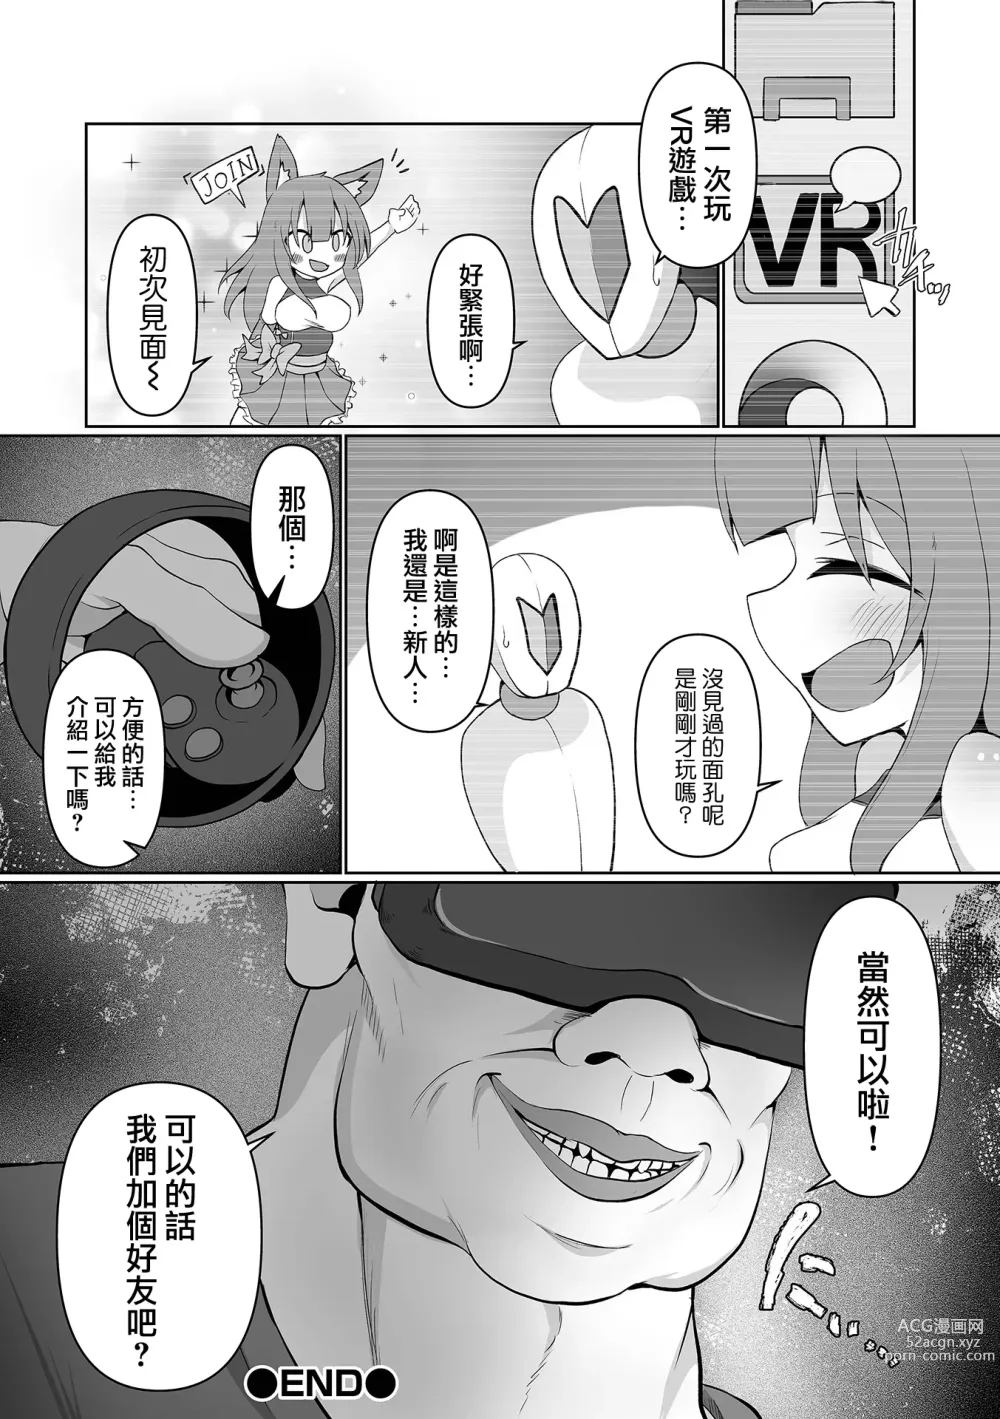 Page 23 of manga Hajimete no Off-kai